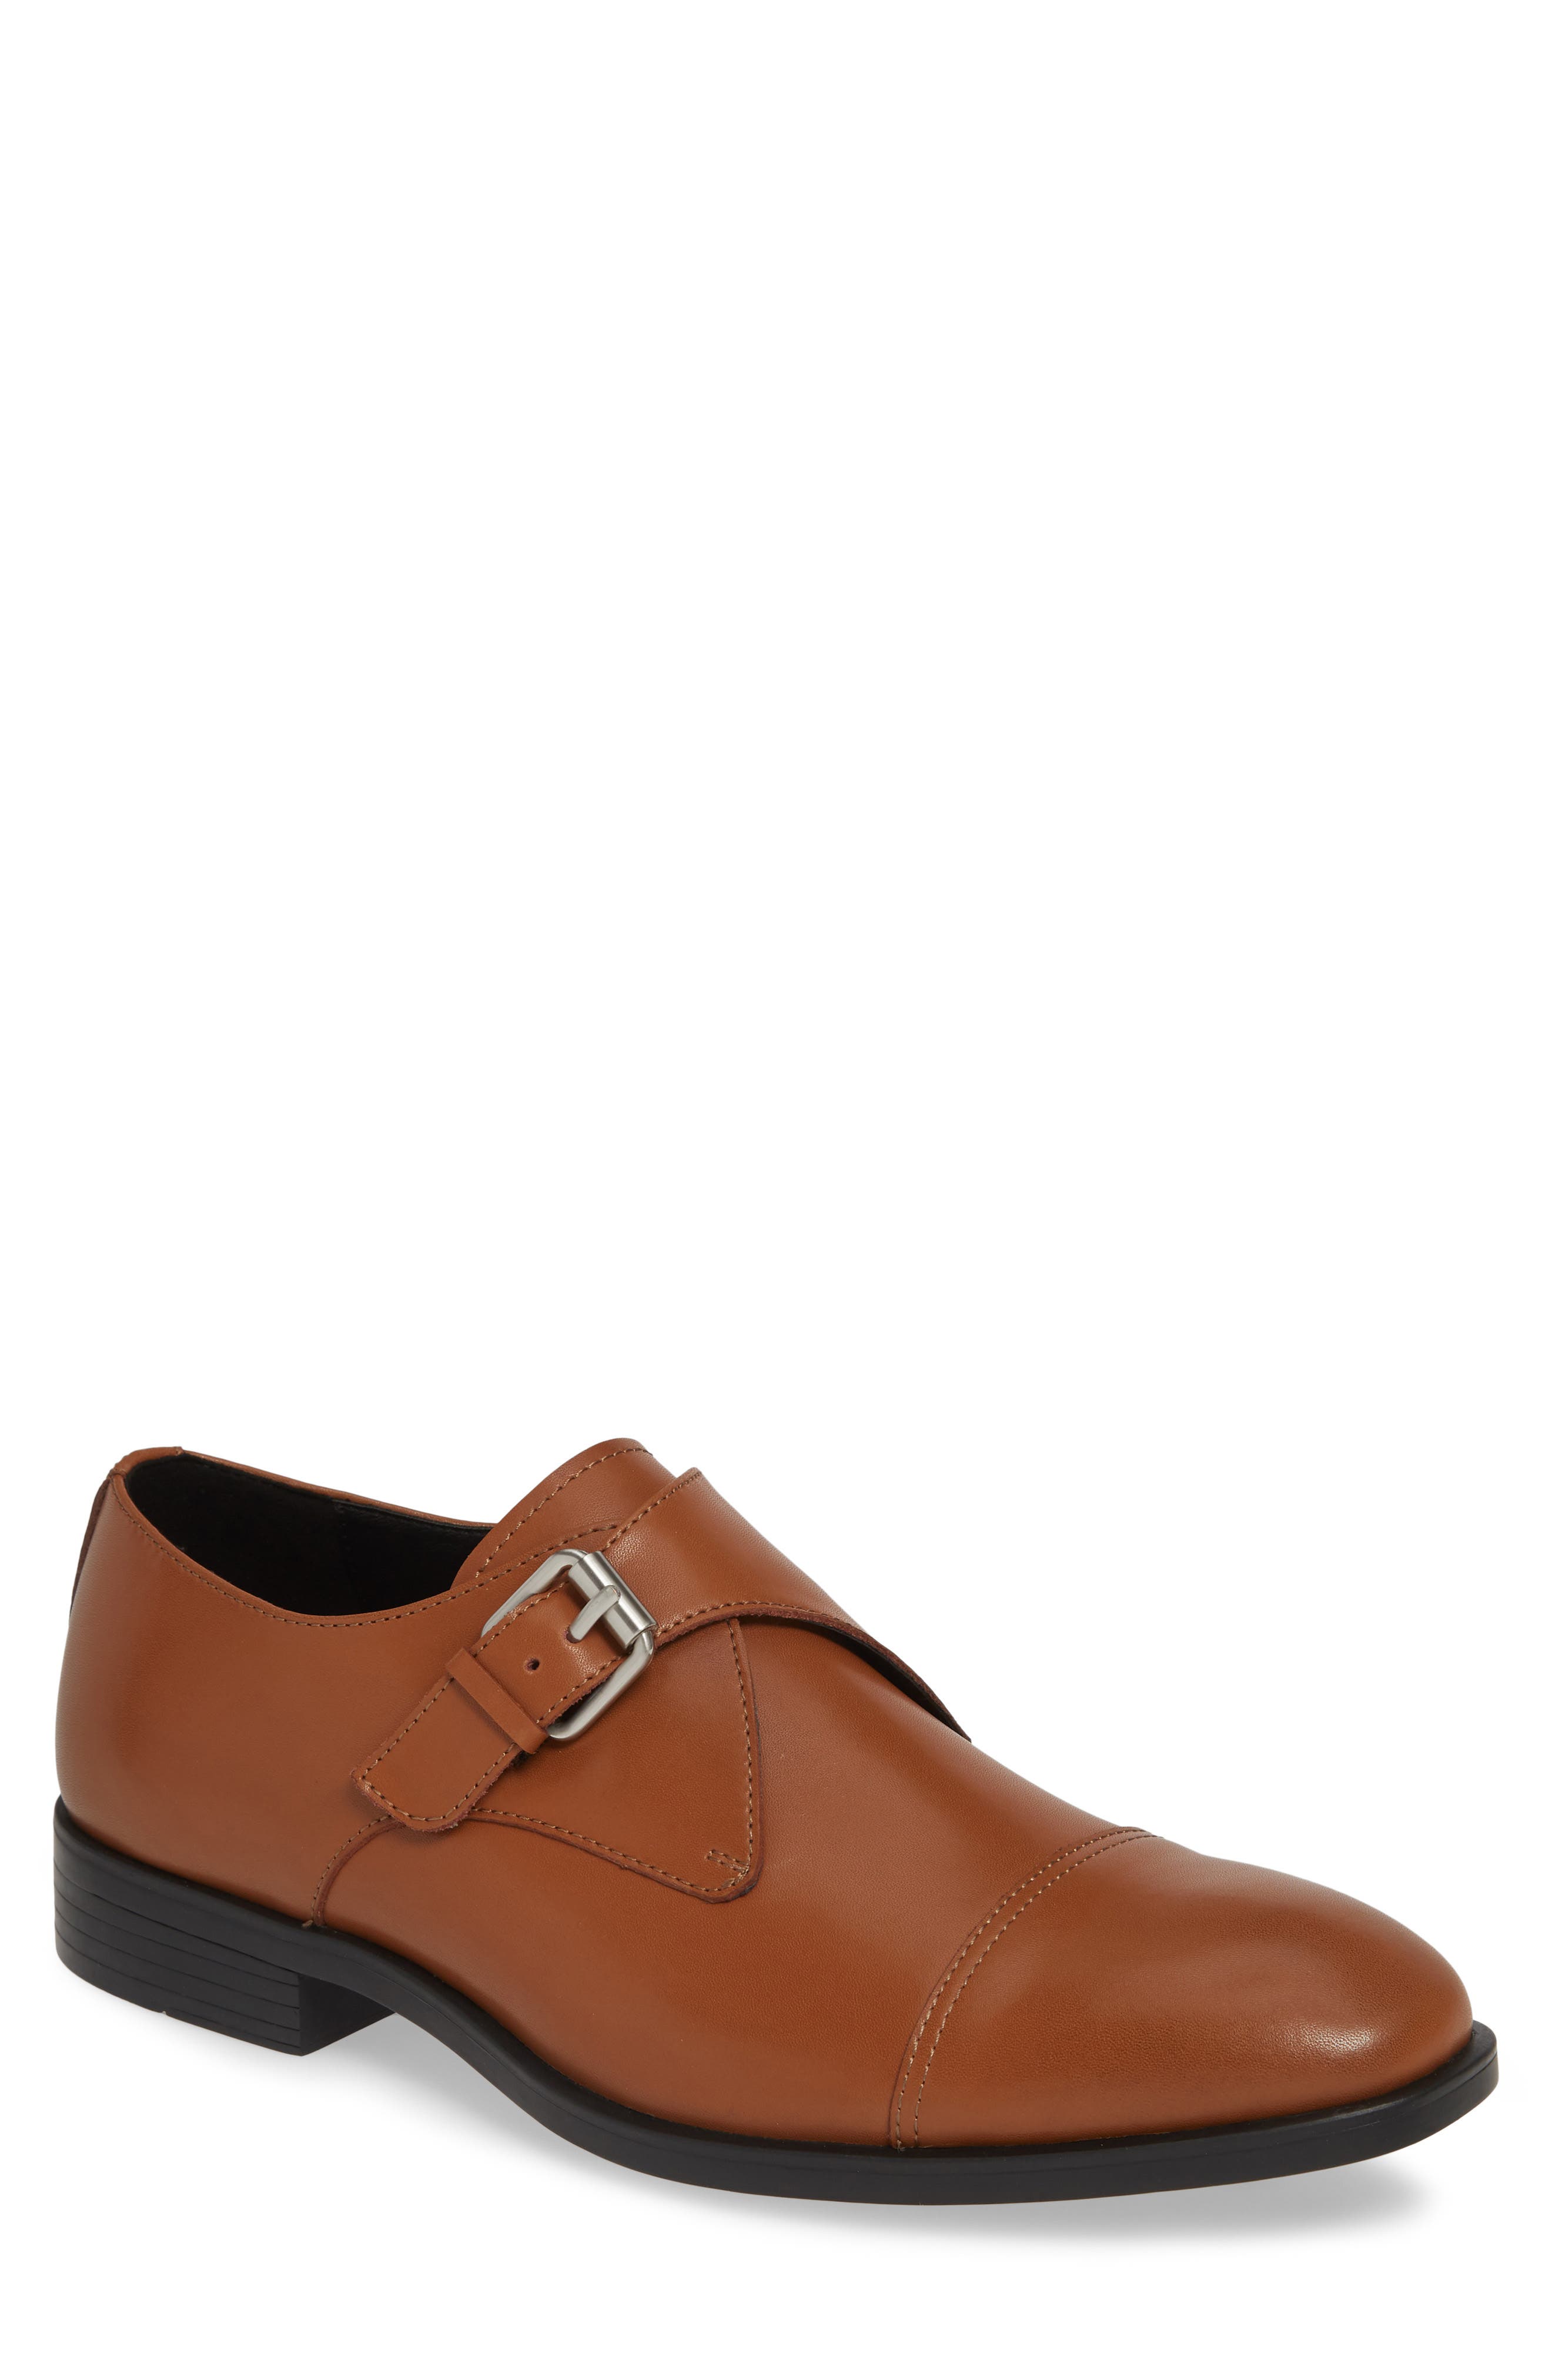 UPC 192675341110 product image for Men's Calvin Klein Channer Monk Strap Shoe, Size 11.5 M - Brown | upcitemdb.com